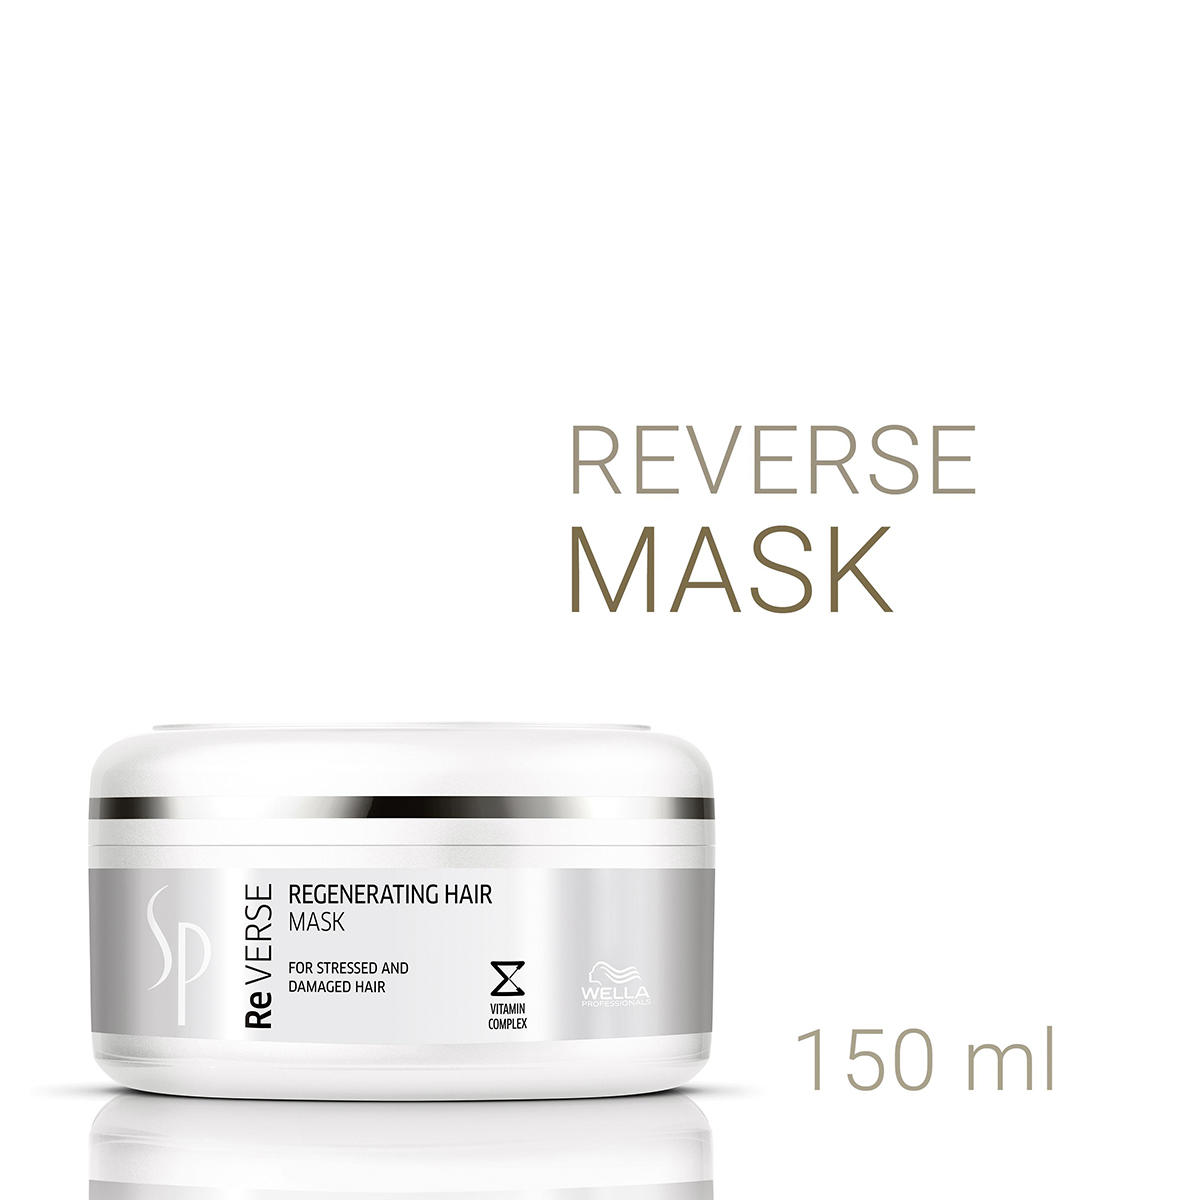 Wella SP ReVerse Regenerating Hair Mask 150 ml - 2